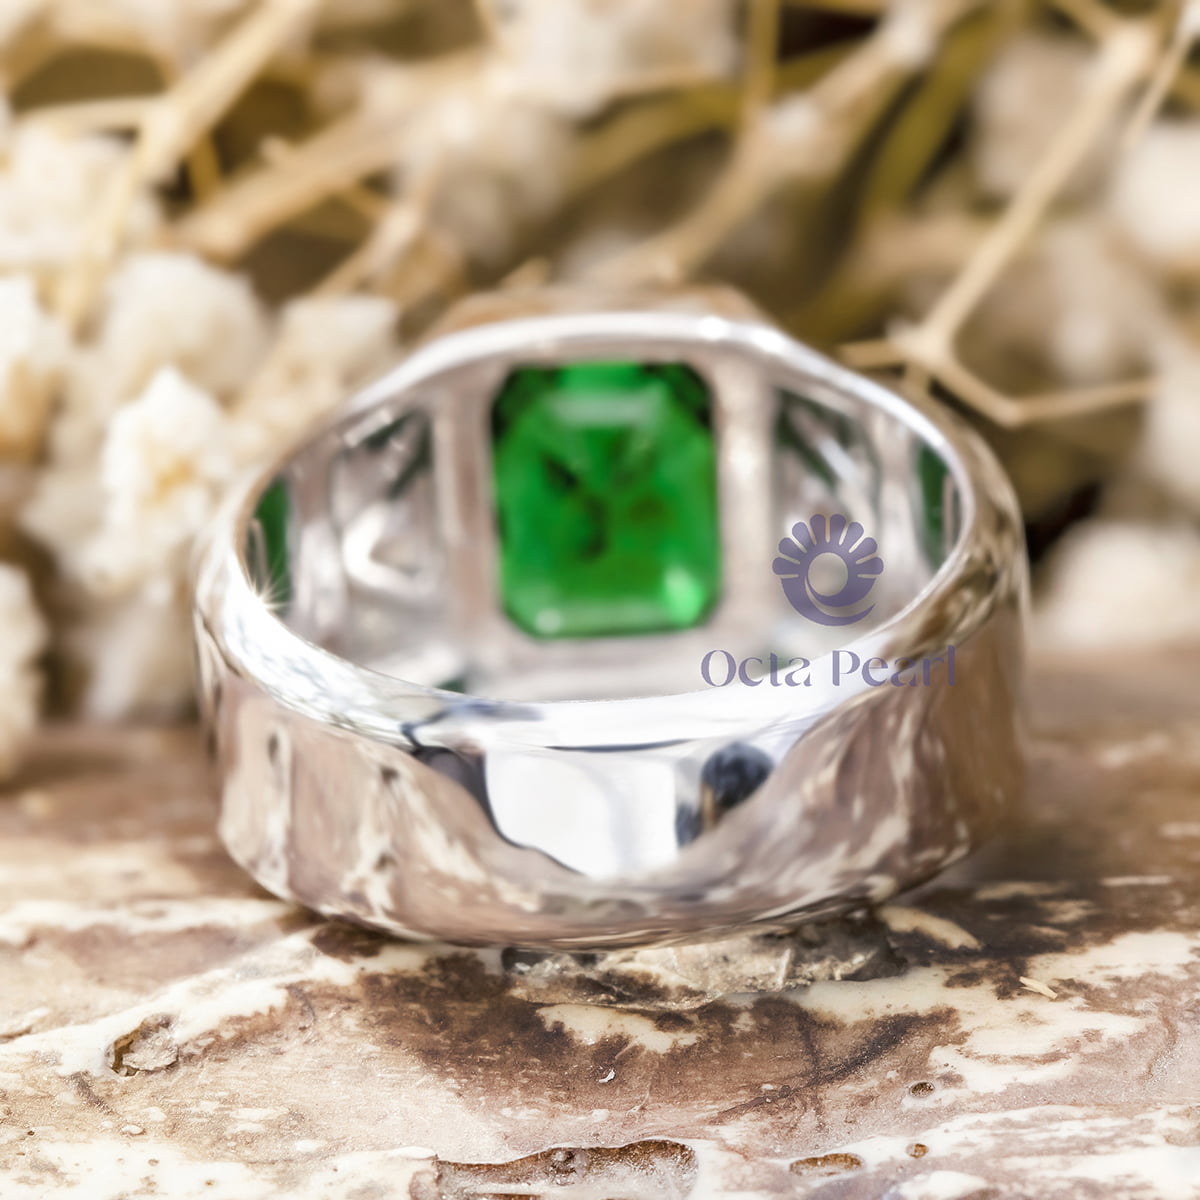 Green Emerald And Triangle Cut CZ Three Stone Bezel Set Office Wear Men's Ring (4 4/5 TCW)